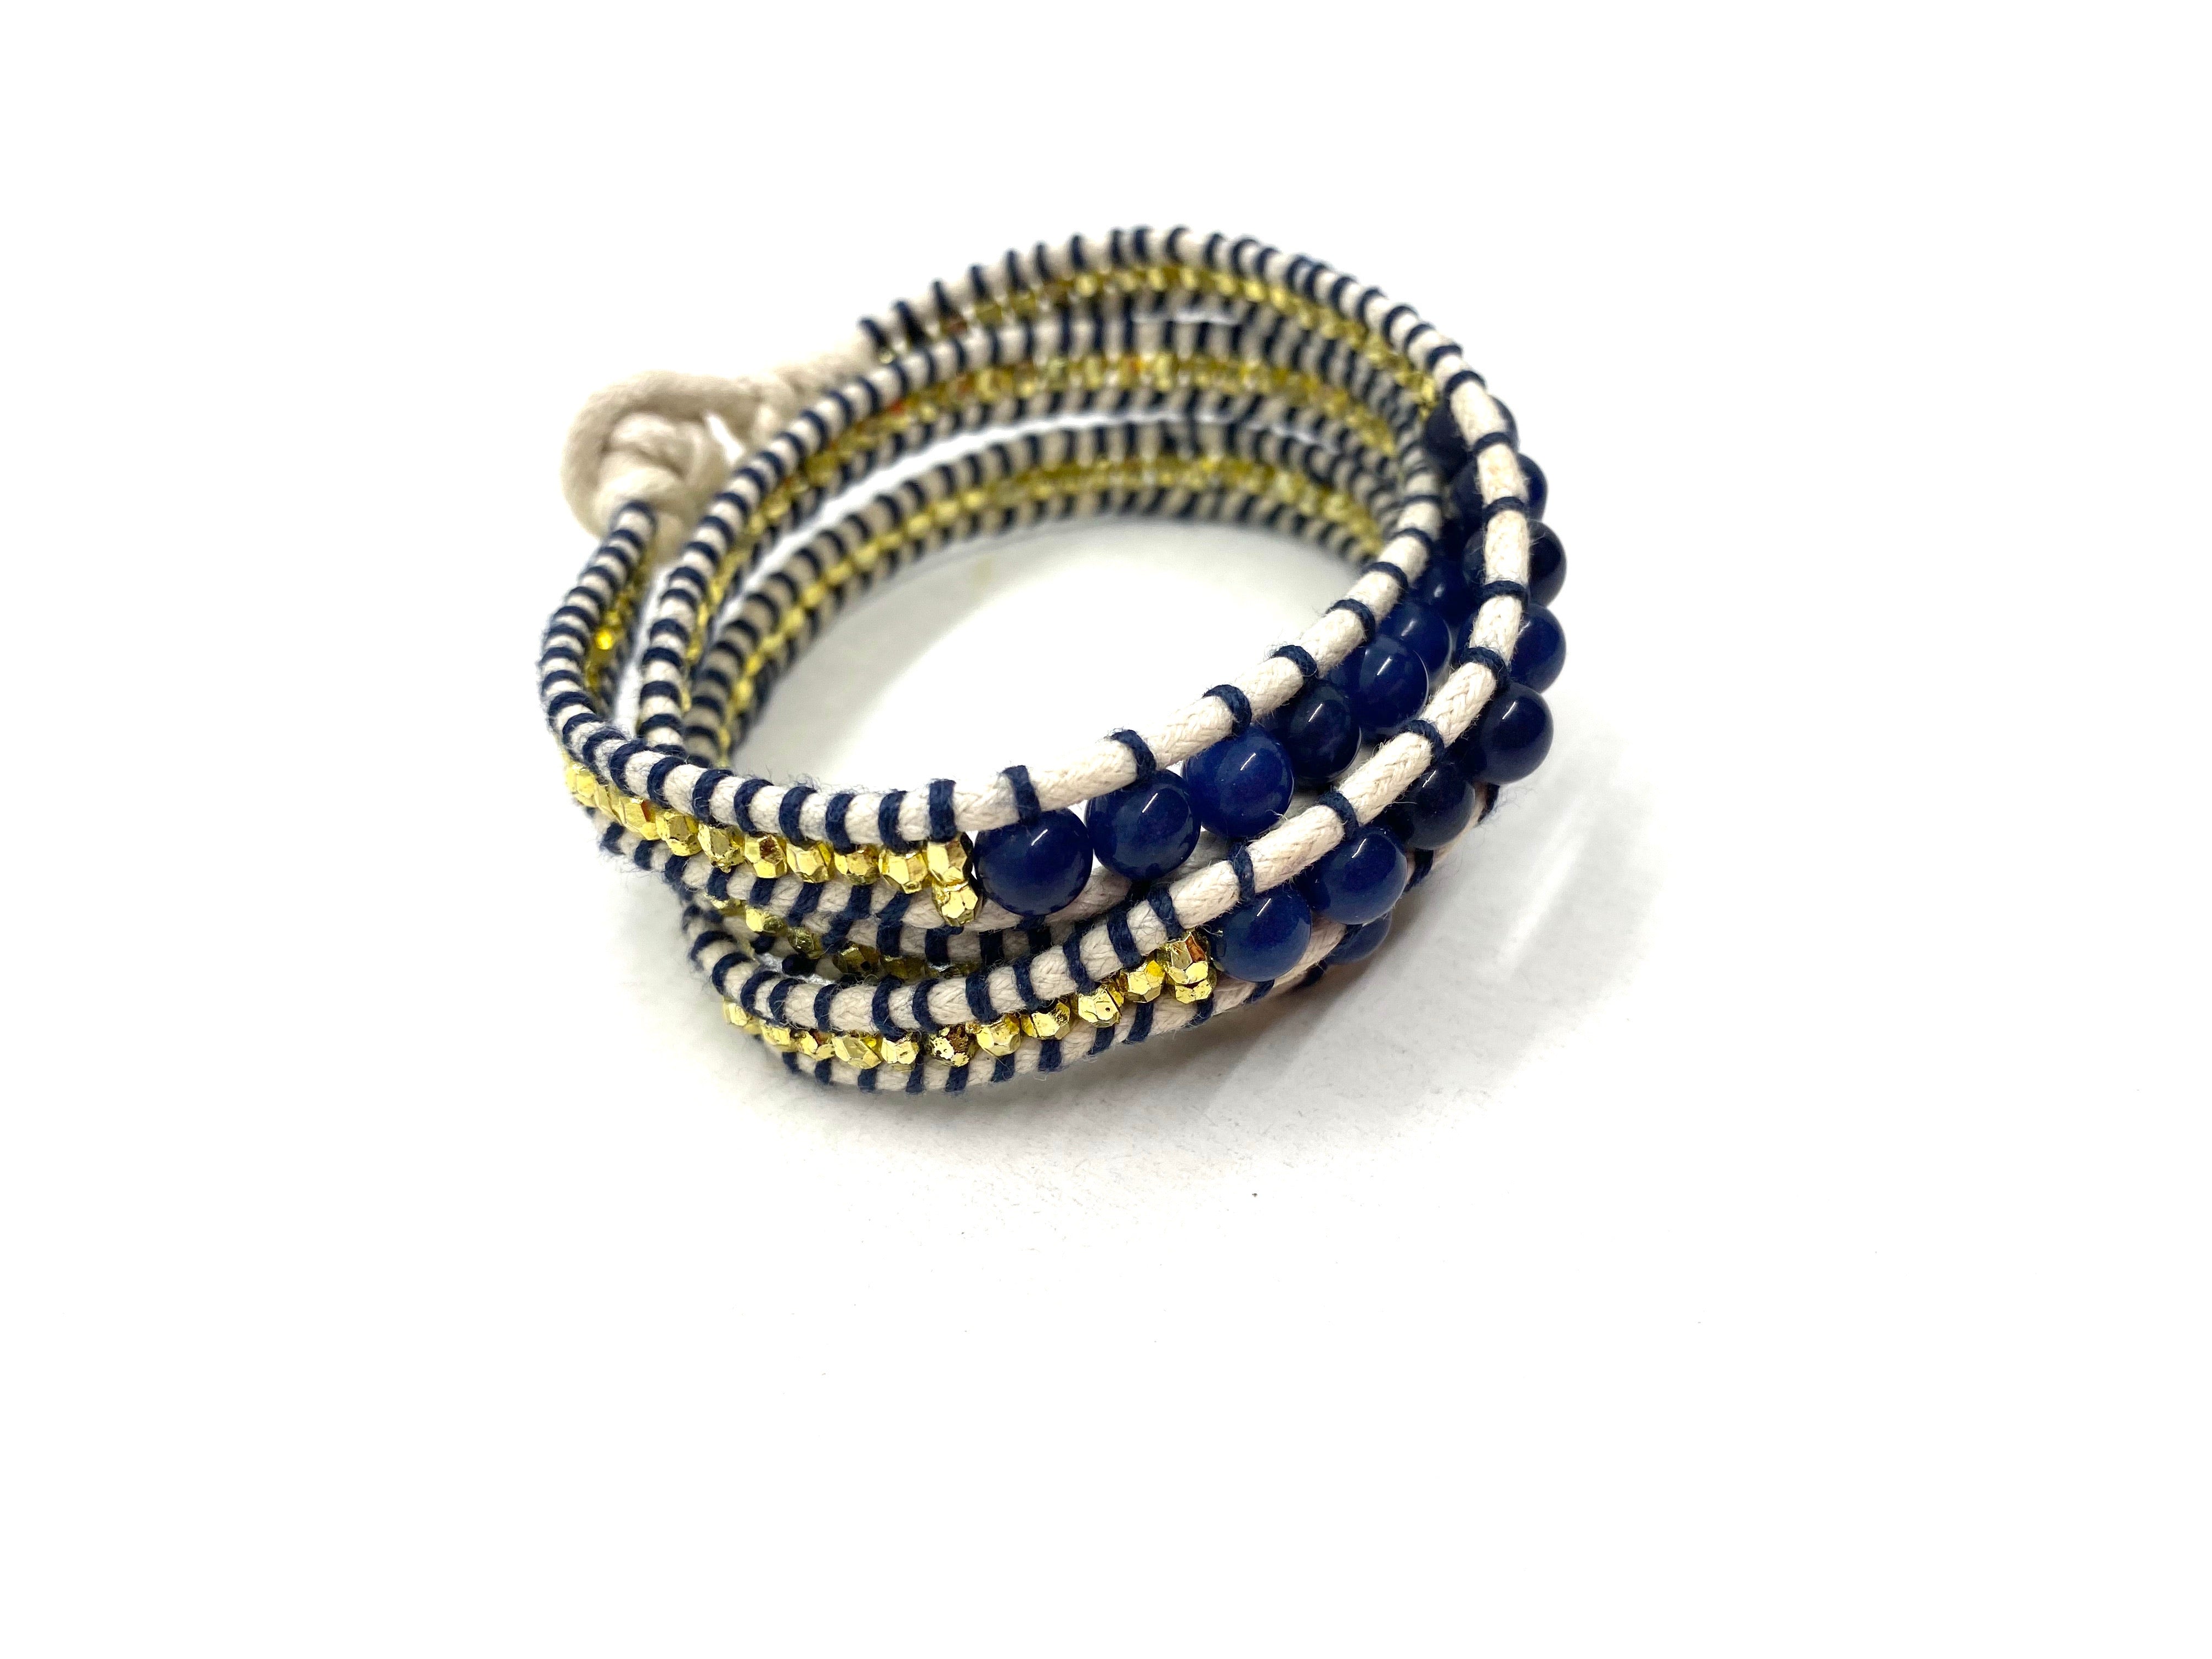 Wraparound dark blue beads bracelet, beige cord and gold resin side bead: